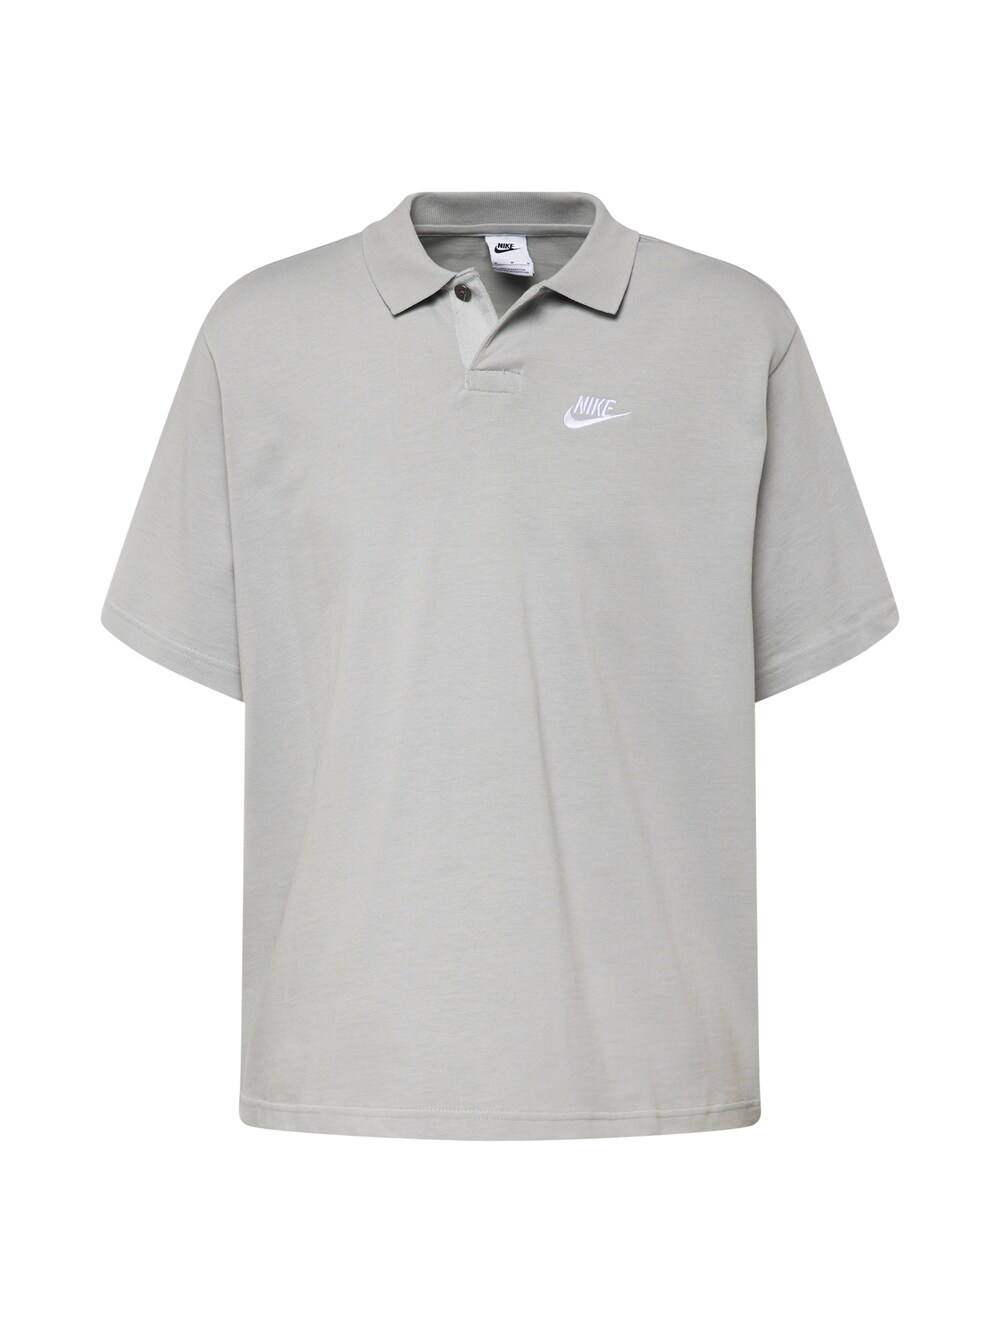 Футболка Nike Sportswear, серый/светло-серый